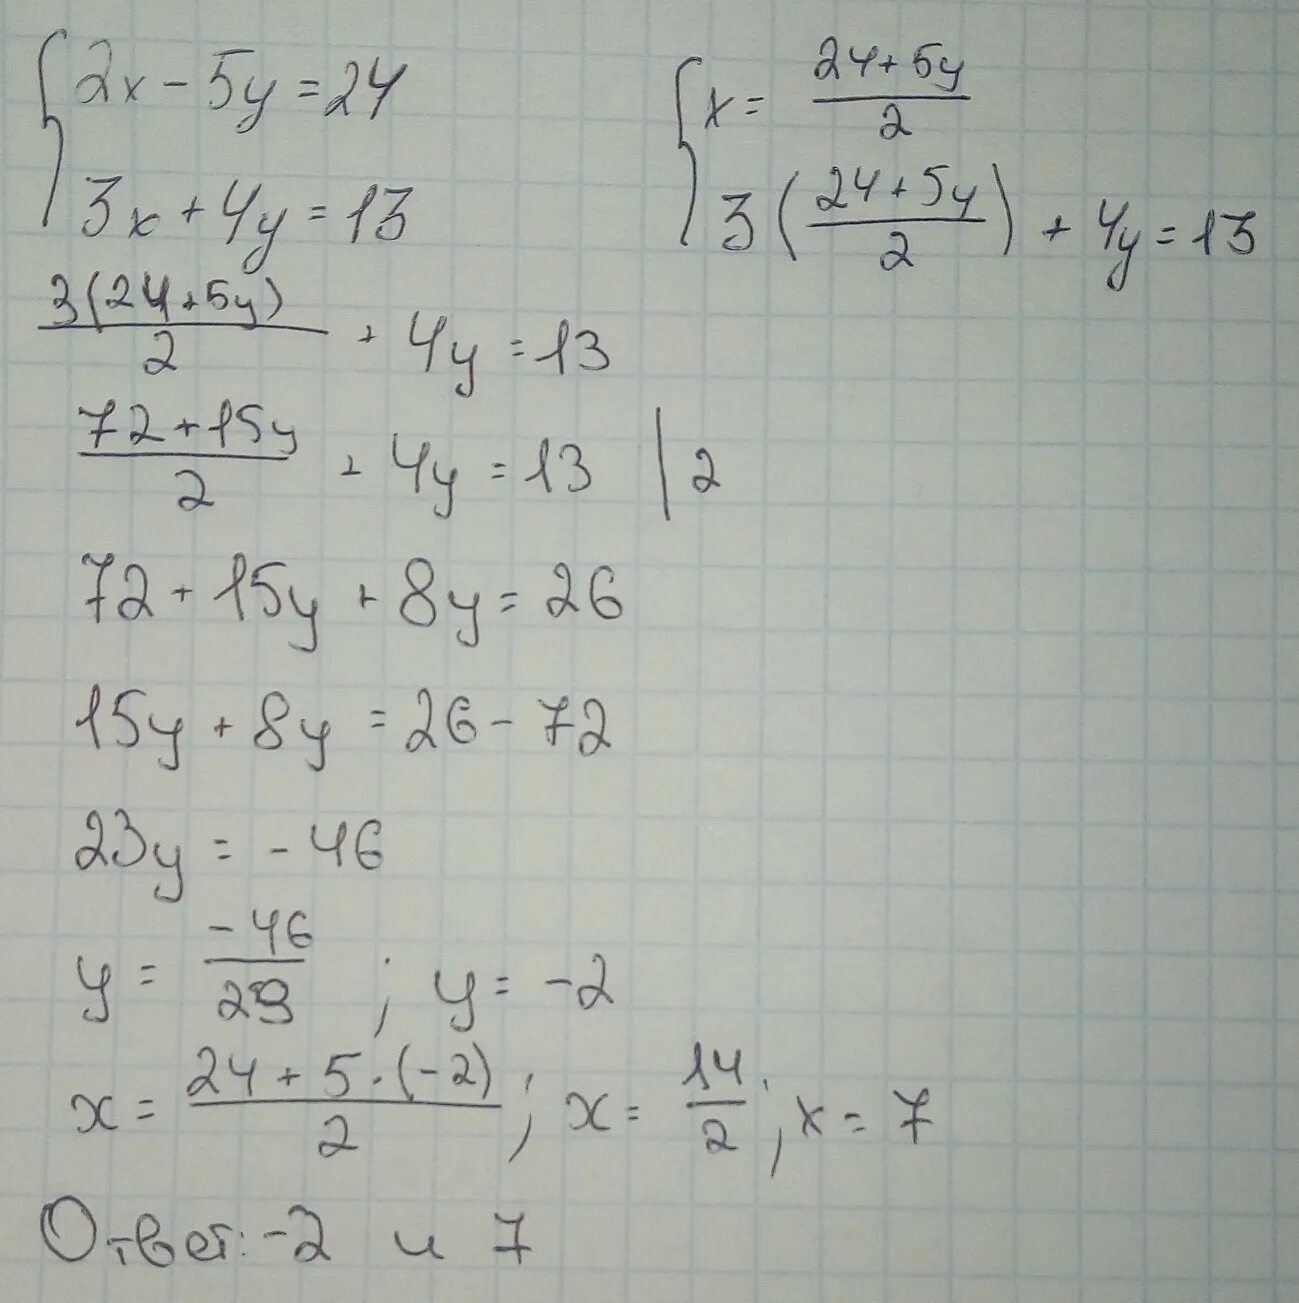 4x 1 13 решение. 13,2:24 Решение. (4у+4у-13)+(4у-4у+13). Решите уравнение 13у+15у-24 60. (-1+I) ¹³ решение.